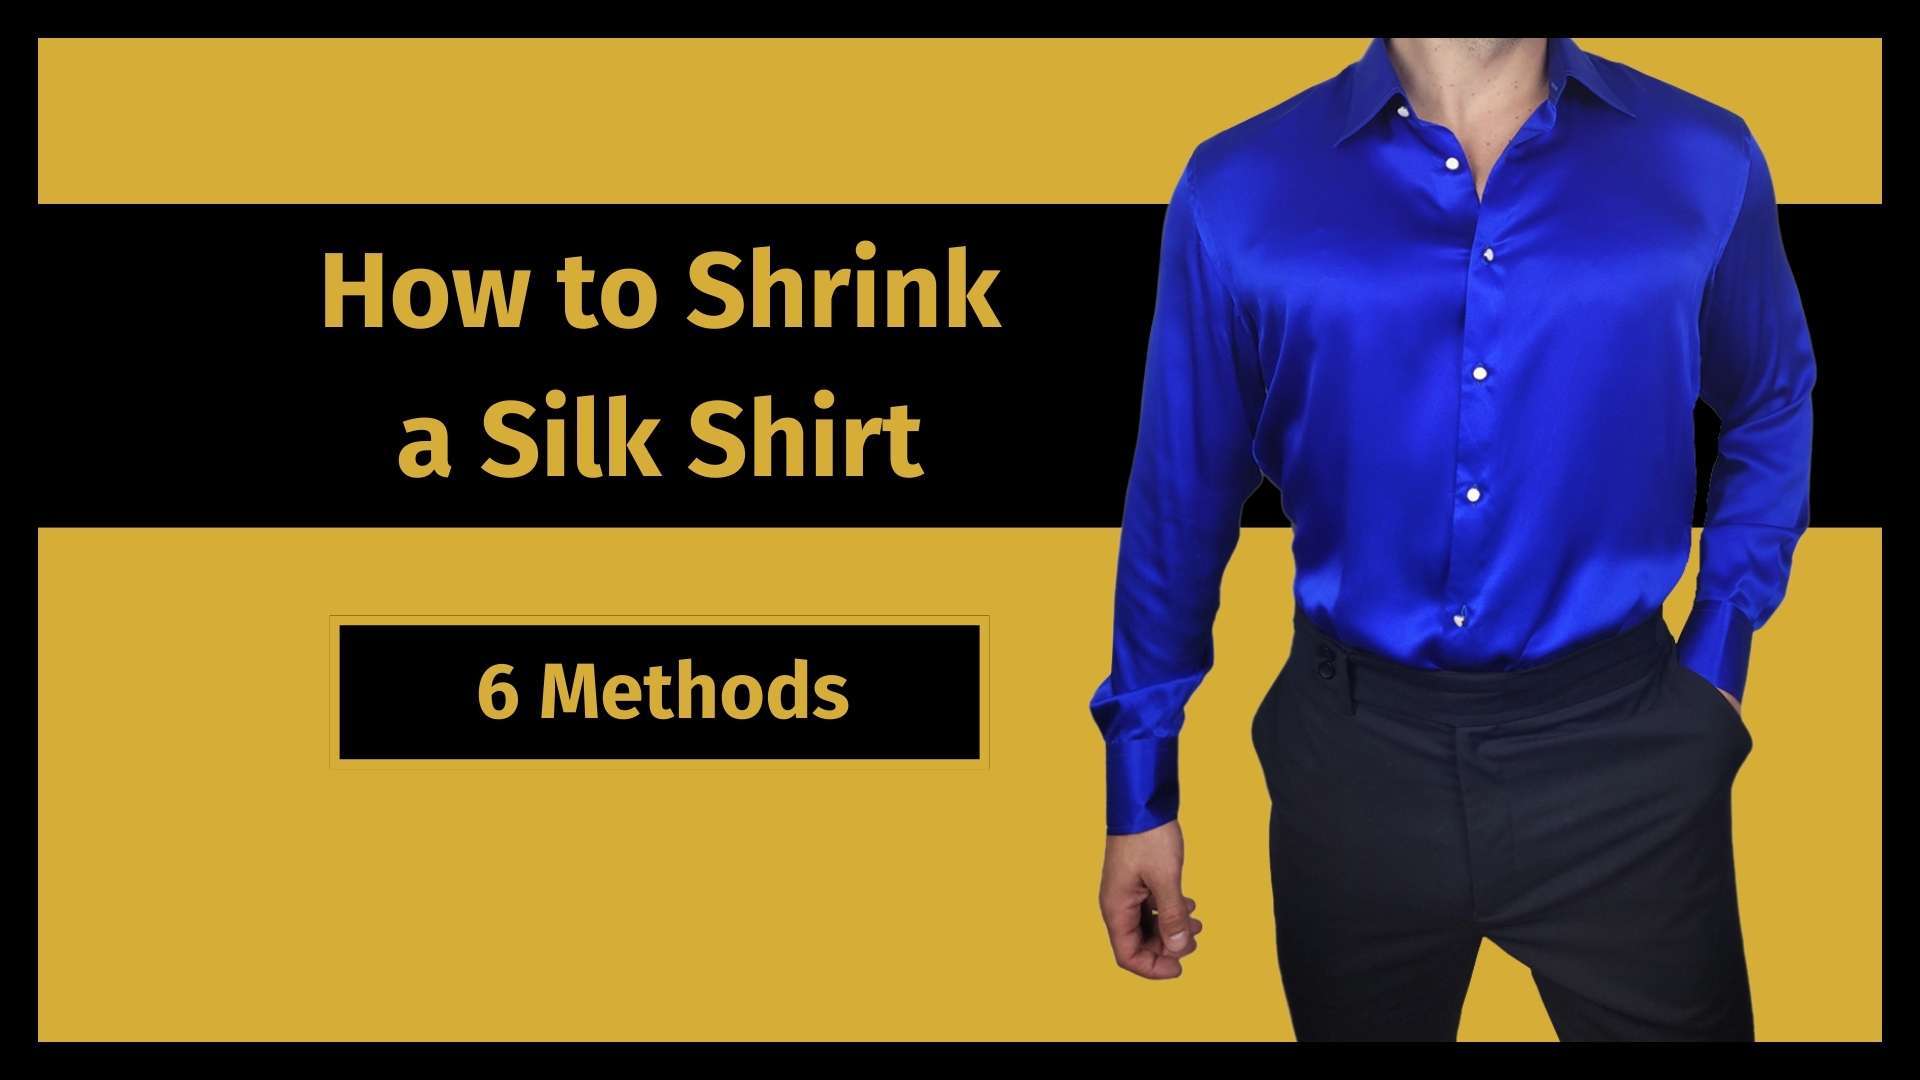 how to shrink a silk shirt banner image with a man wearing a blue long sleeve silk shirt